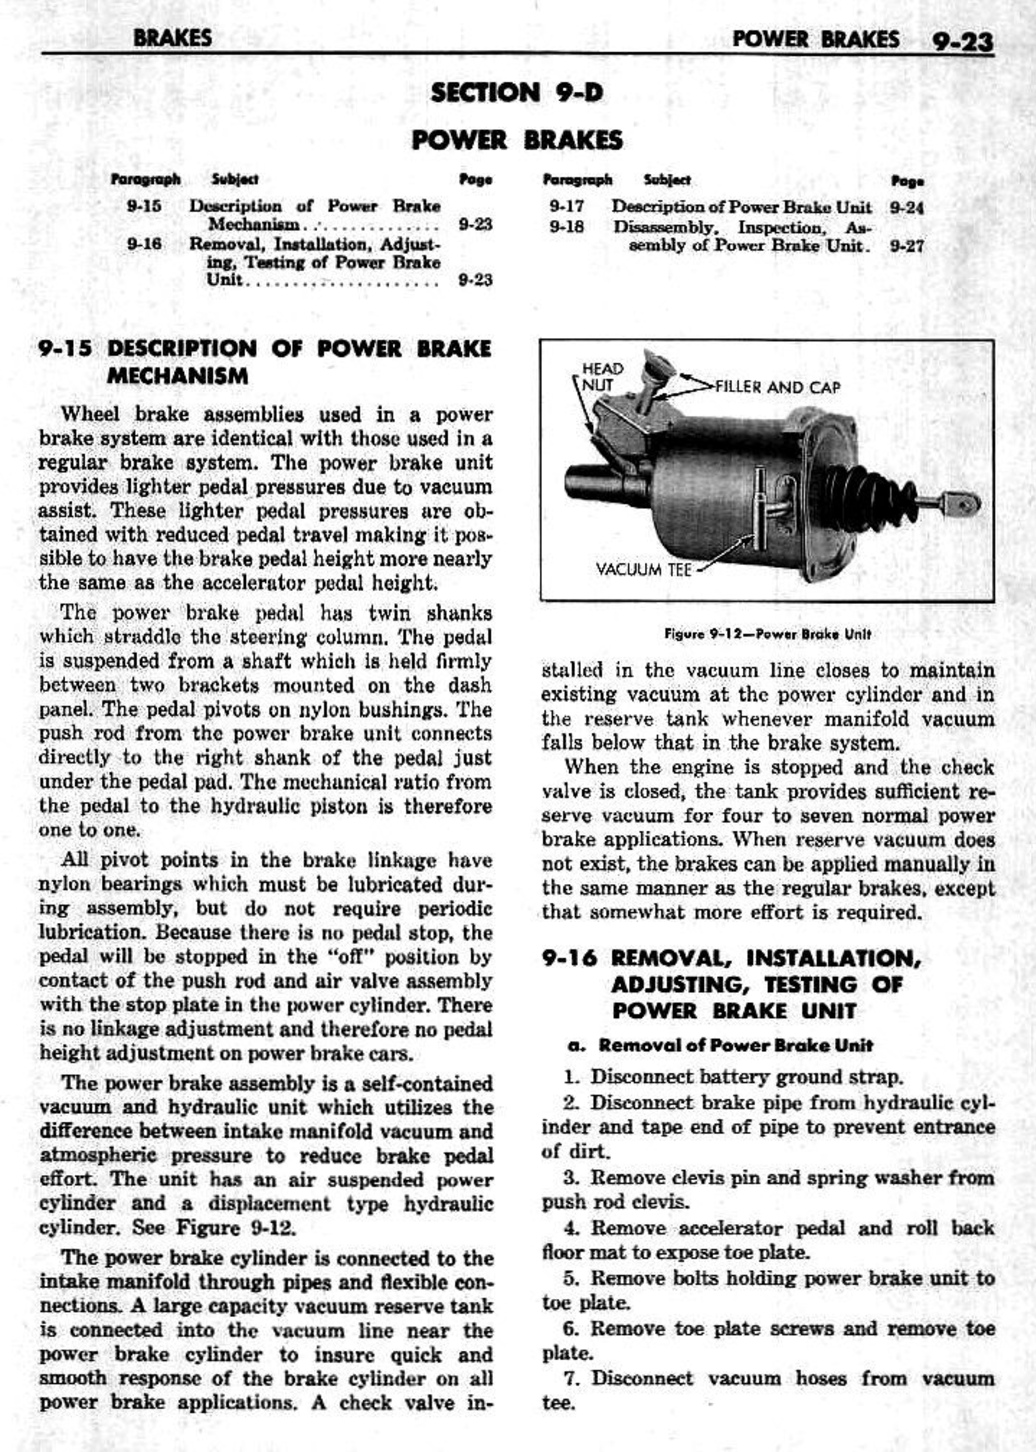 n_10 1959 Buick Shop Manual - Brakes-023-023.jpg